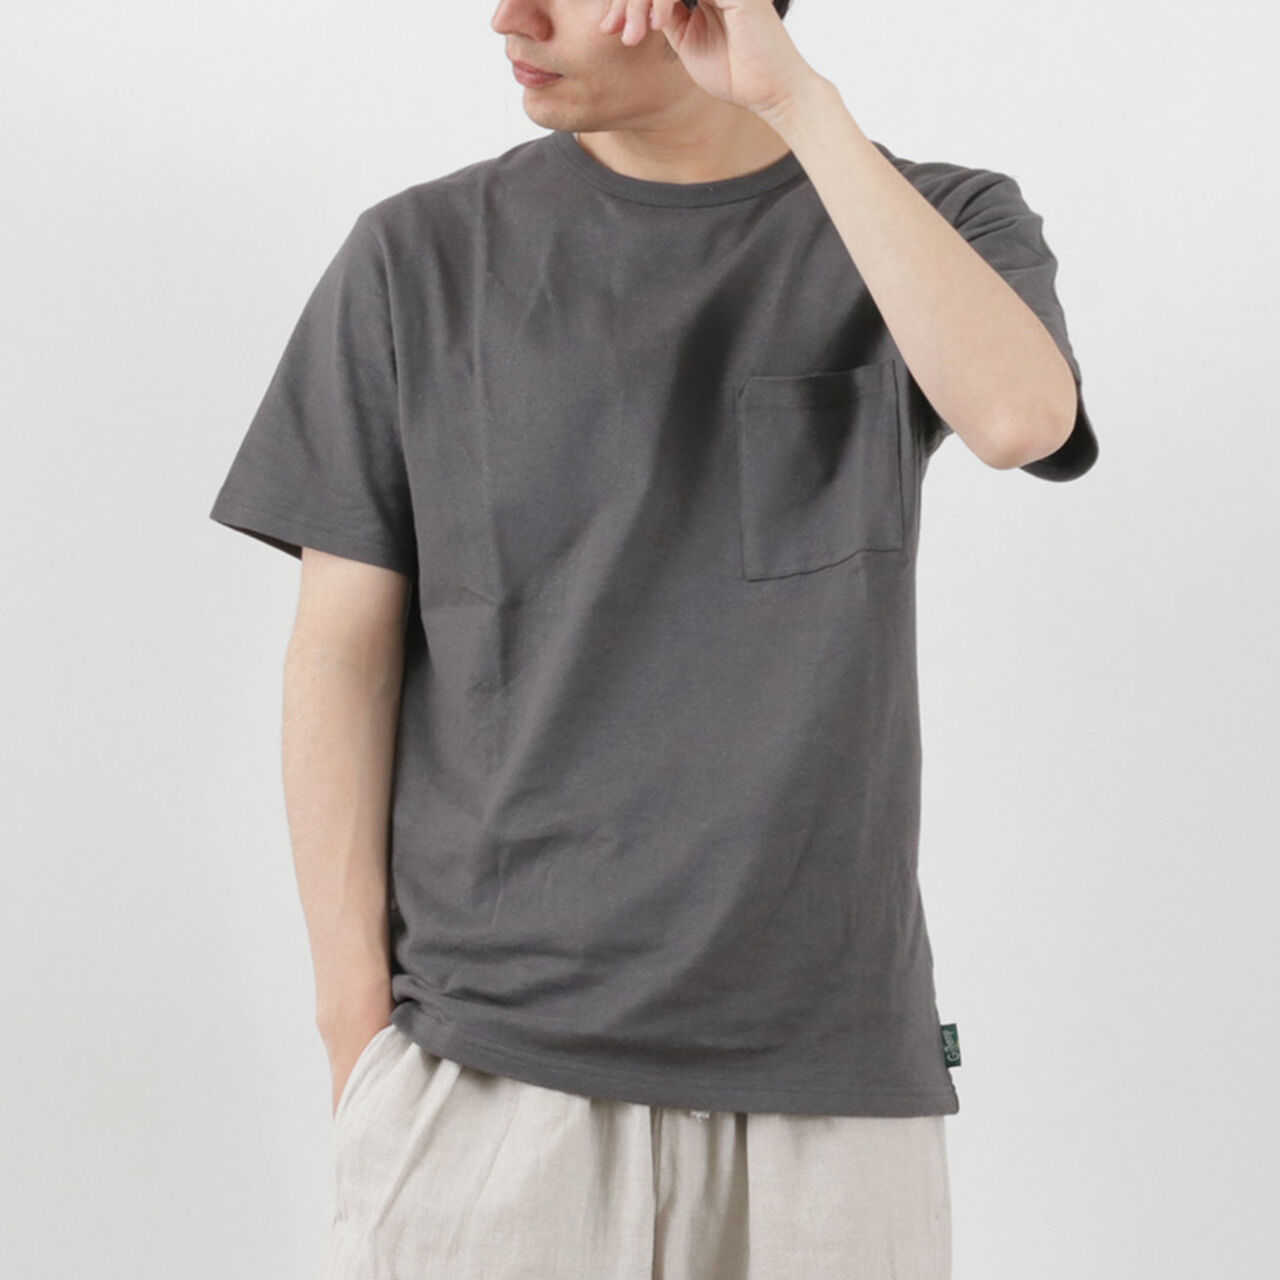 10oz Basic Fit Pocket T-Shirt,CharcoalGrey, large image number 0